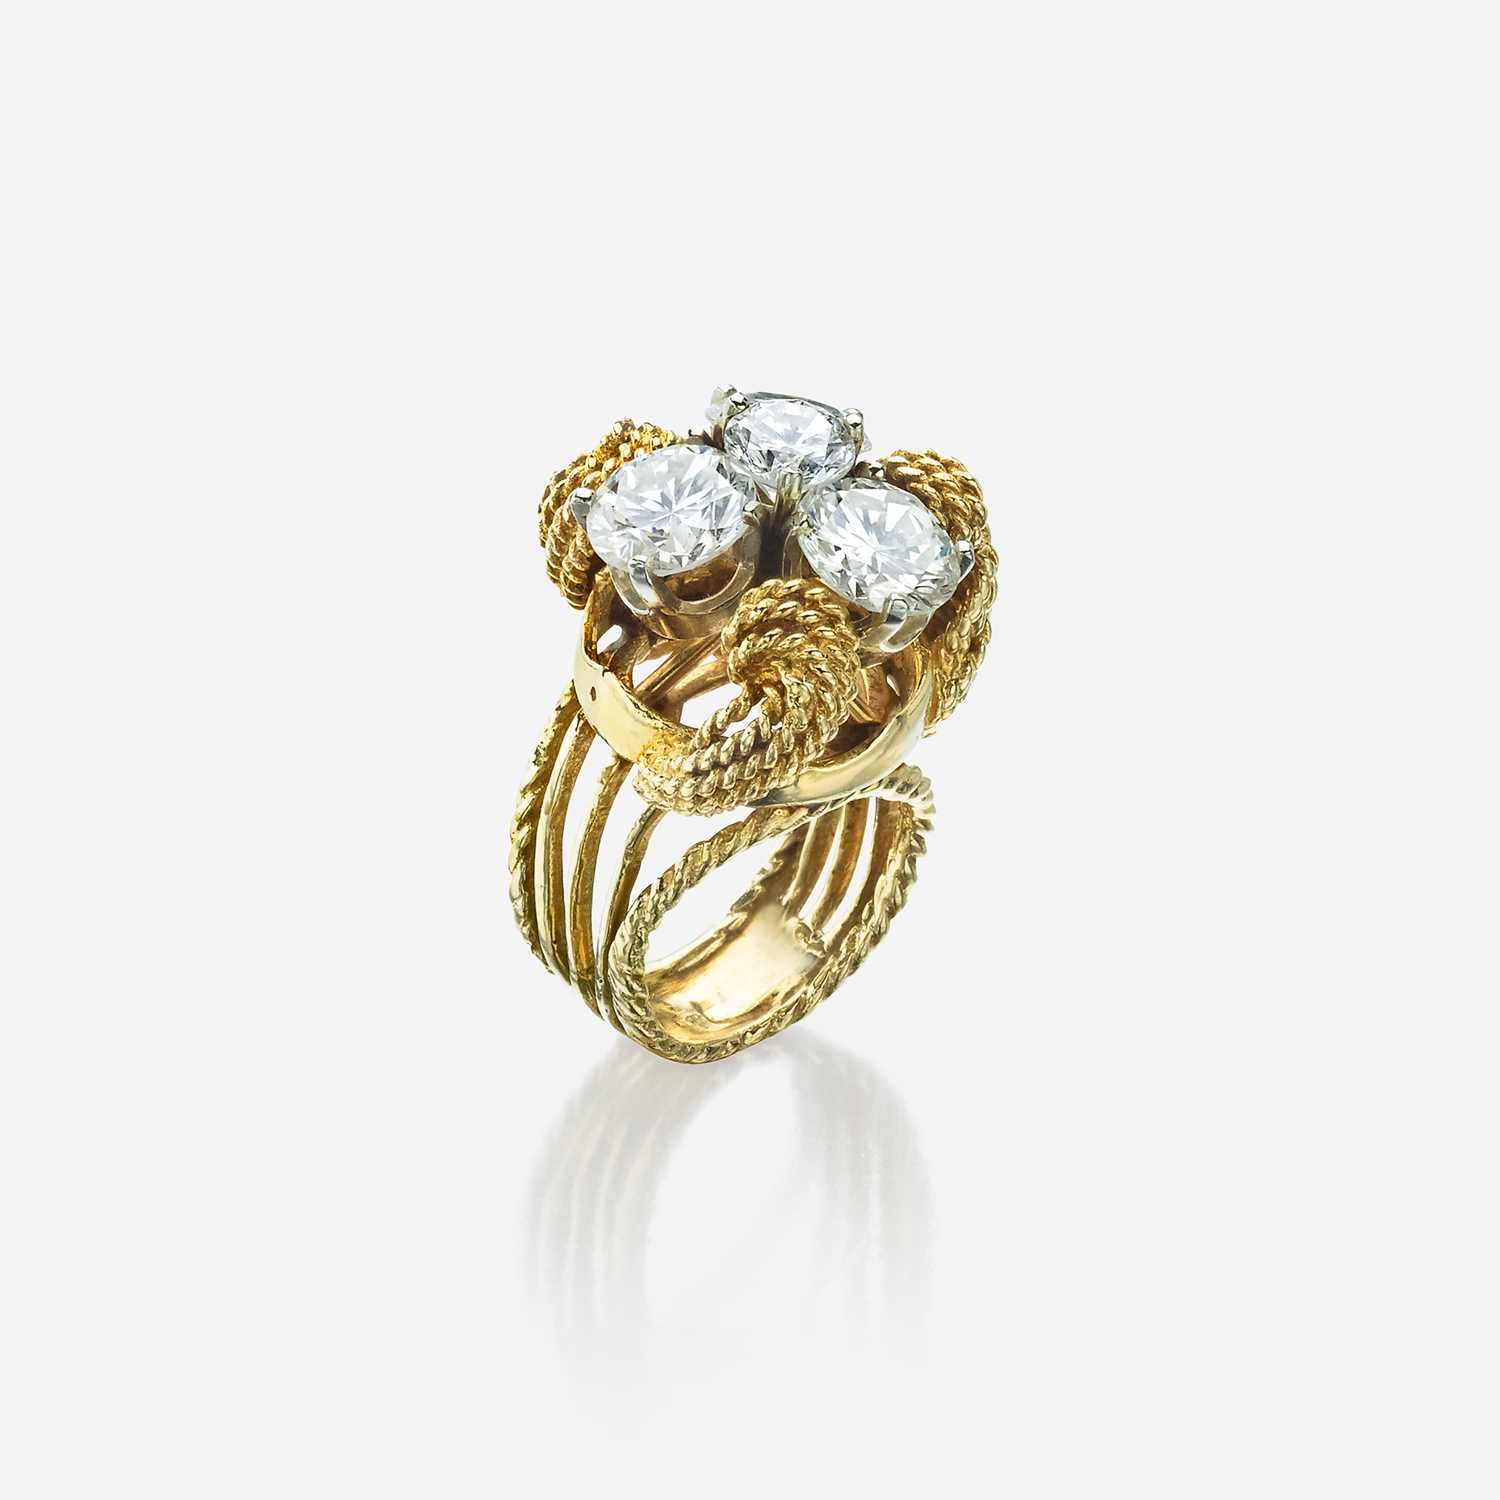 Lot 75 - A diamond and fourteen karat gold ring